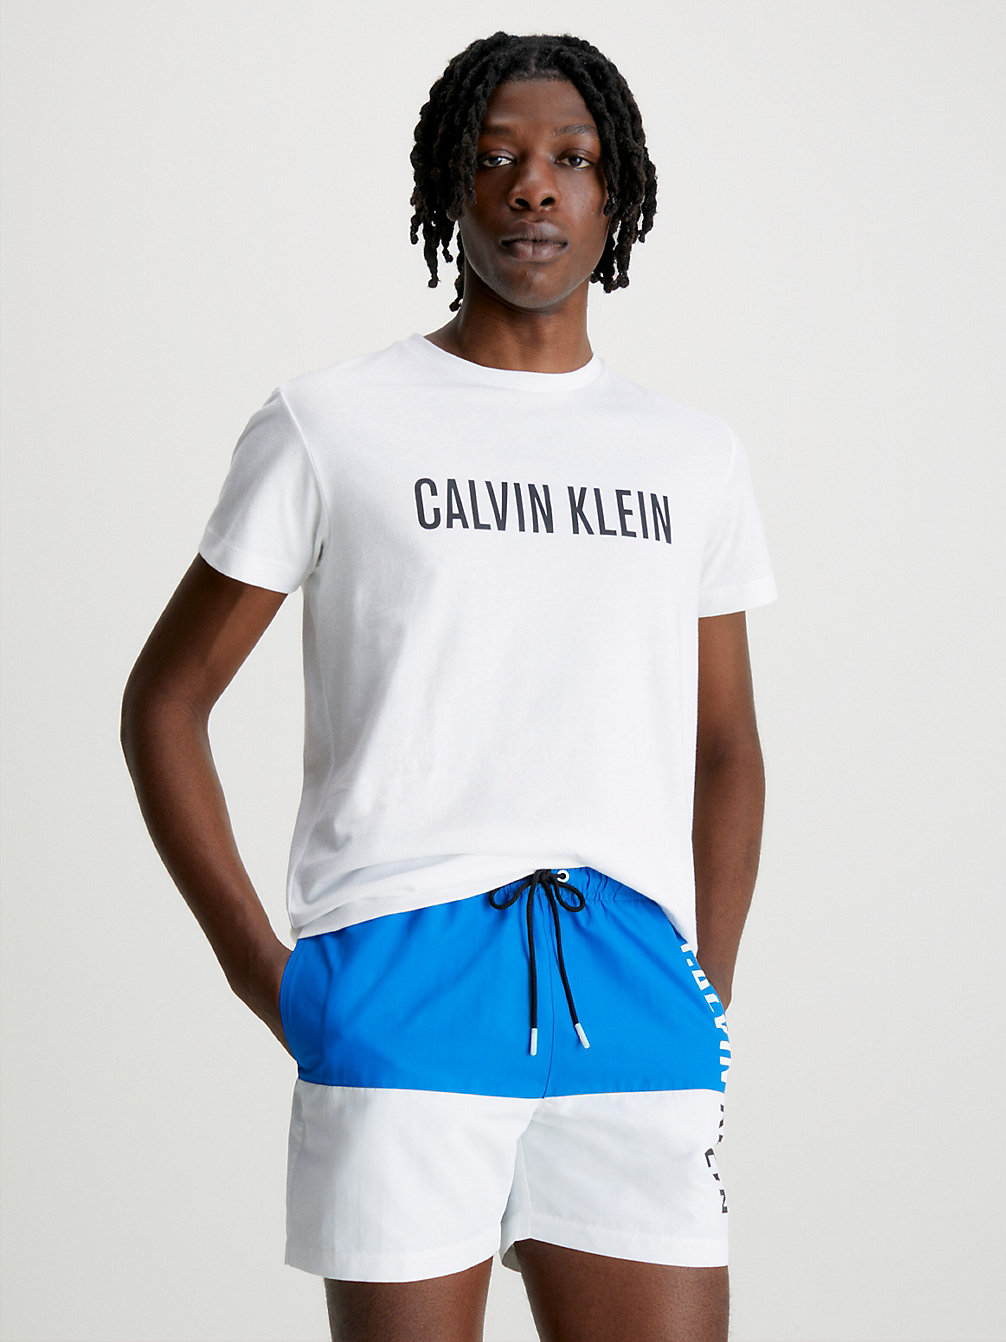 T-Shirt De Plage - Intense Power > PVH CLASSIC WHITE > undefined hommes > Calvin Klein